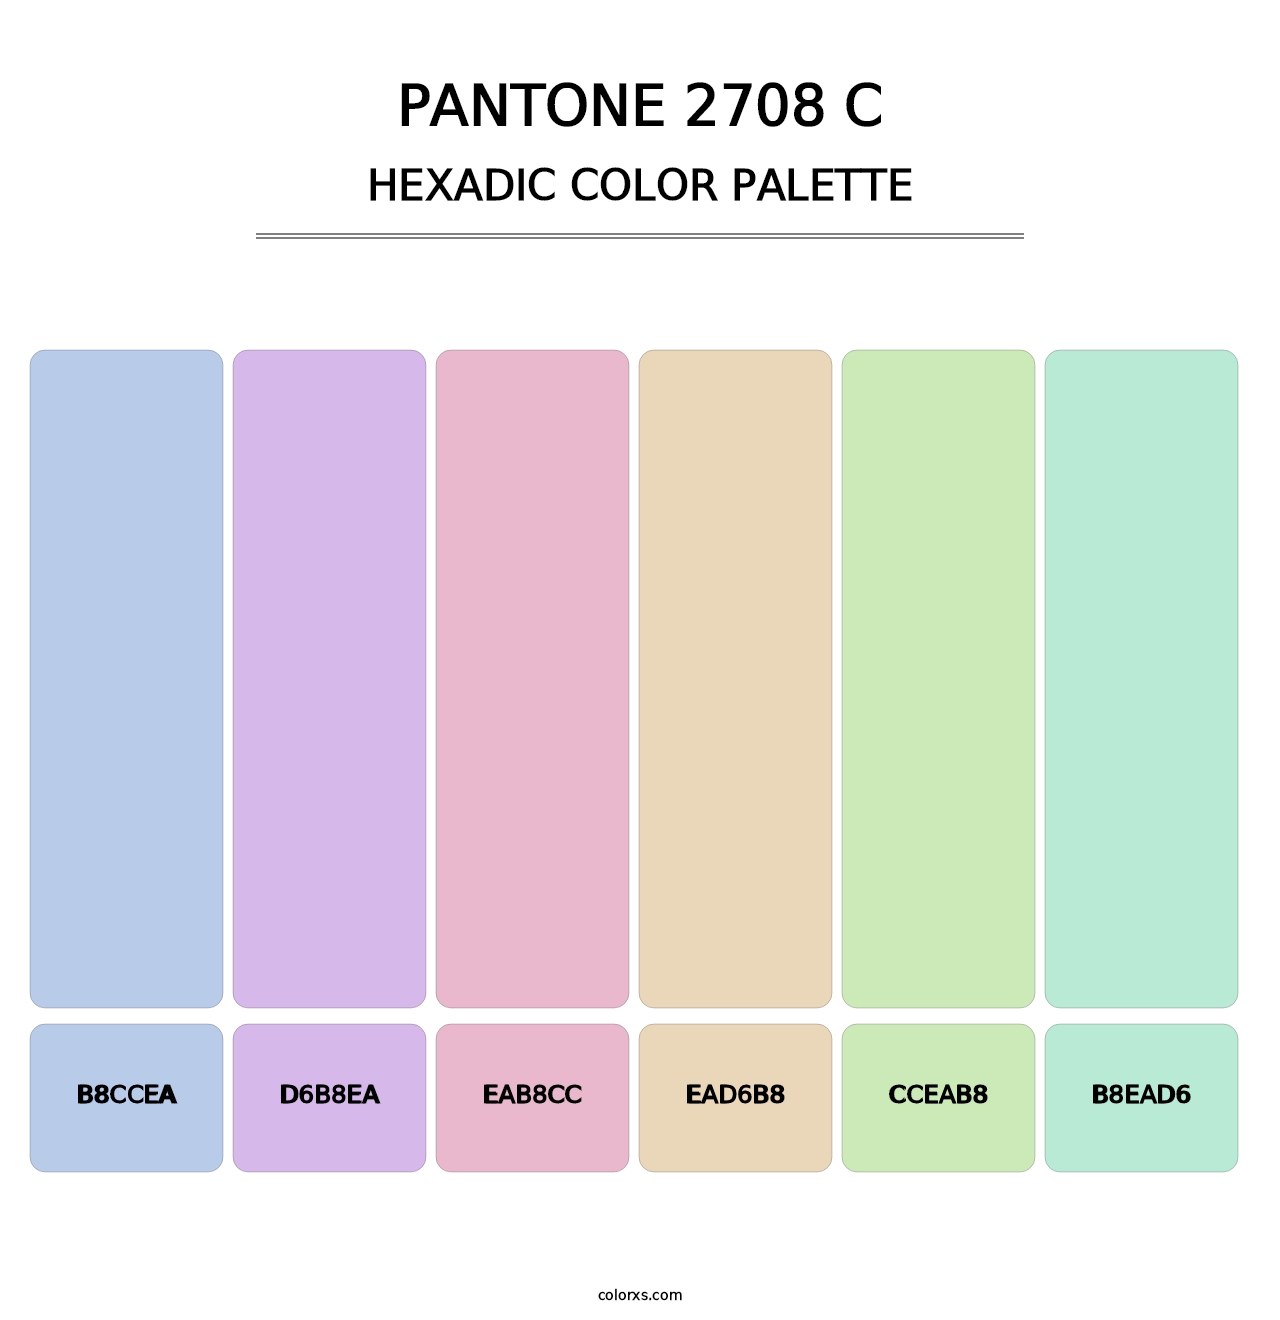 PANTONE 2708 C - Hexadic Color Palette